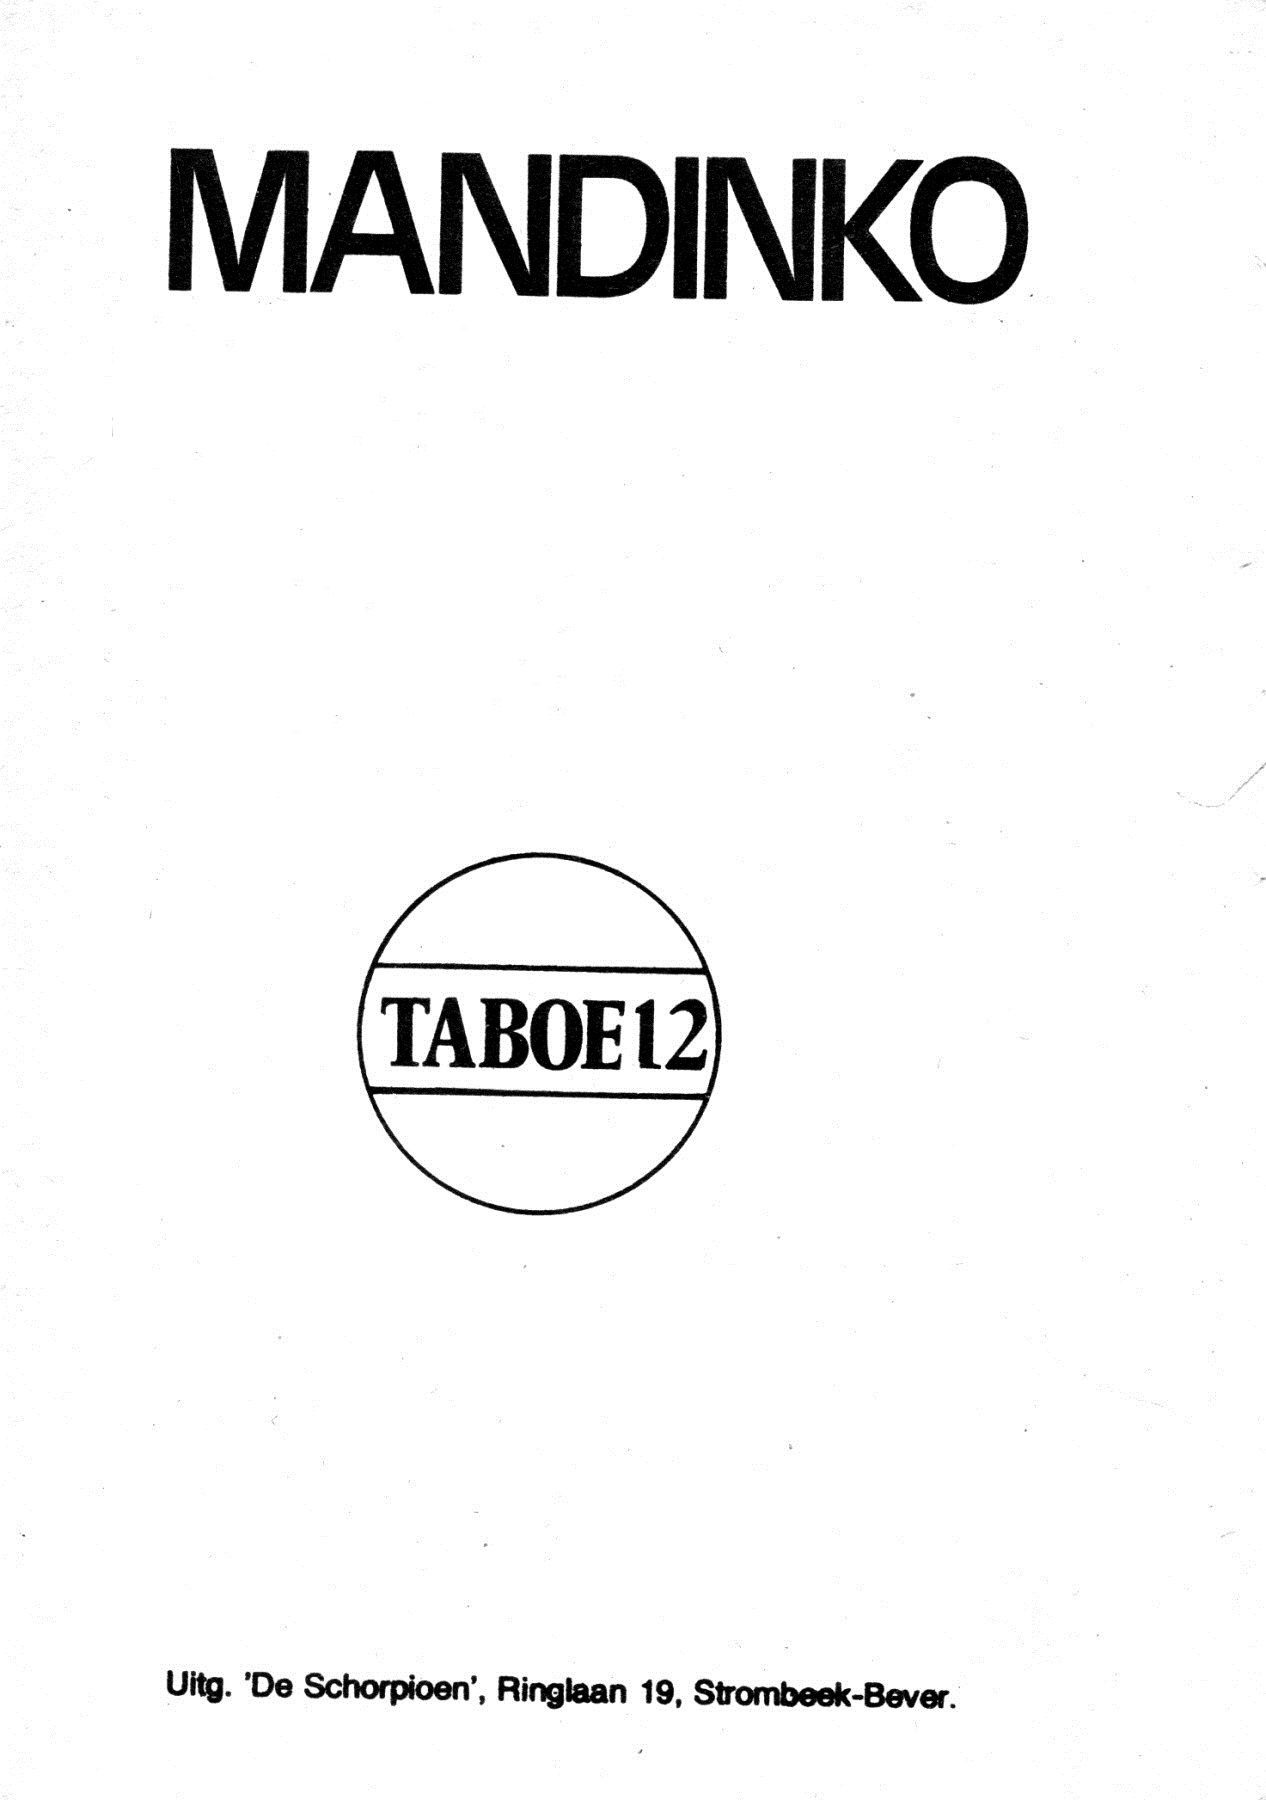 Taboe - 012 - Mandinko (Dutch) 1